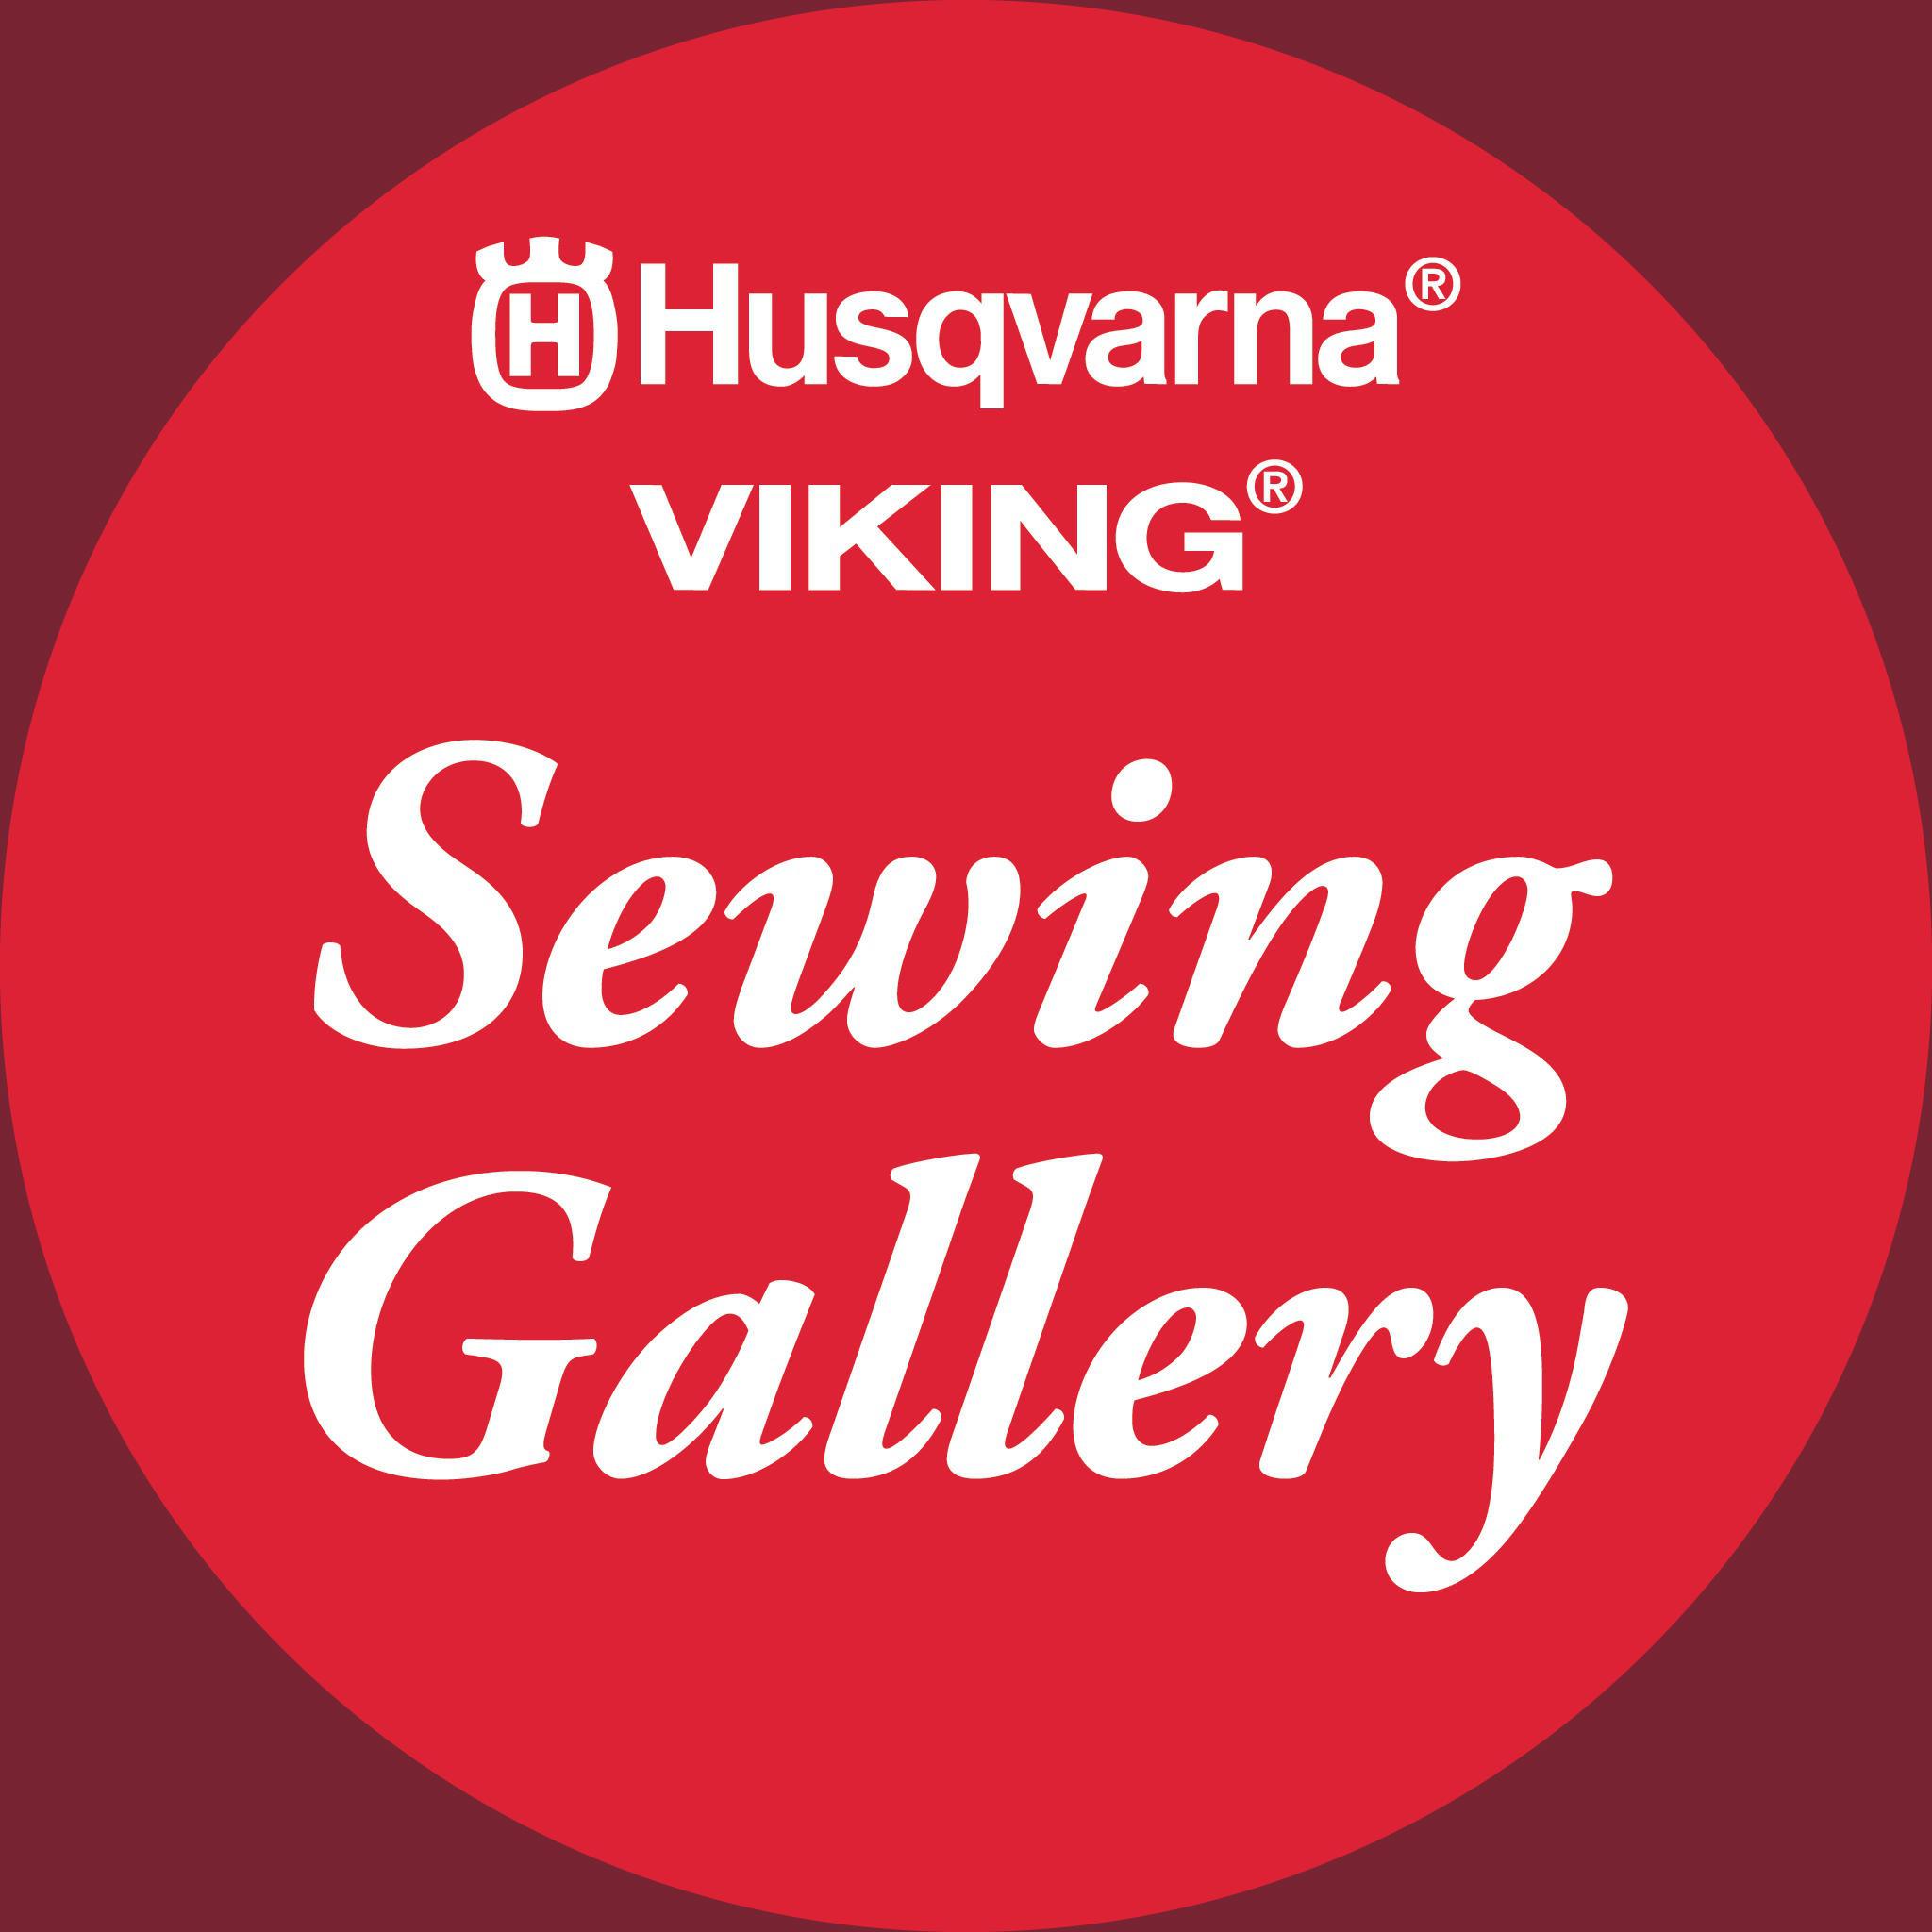 Viking Sewing Gallery